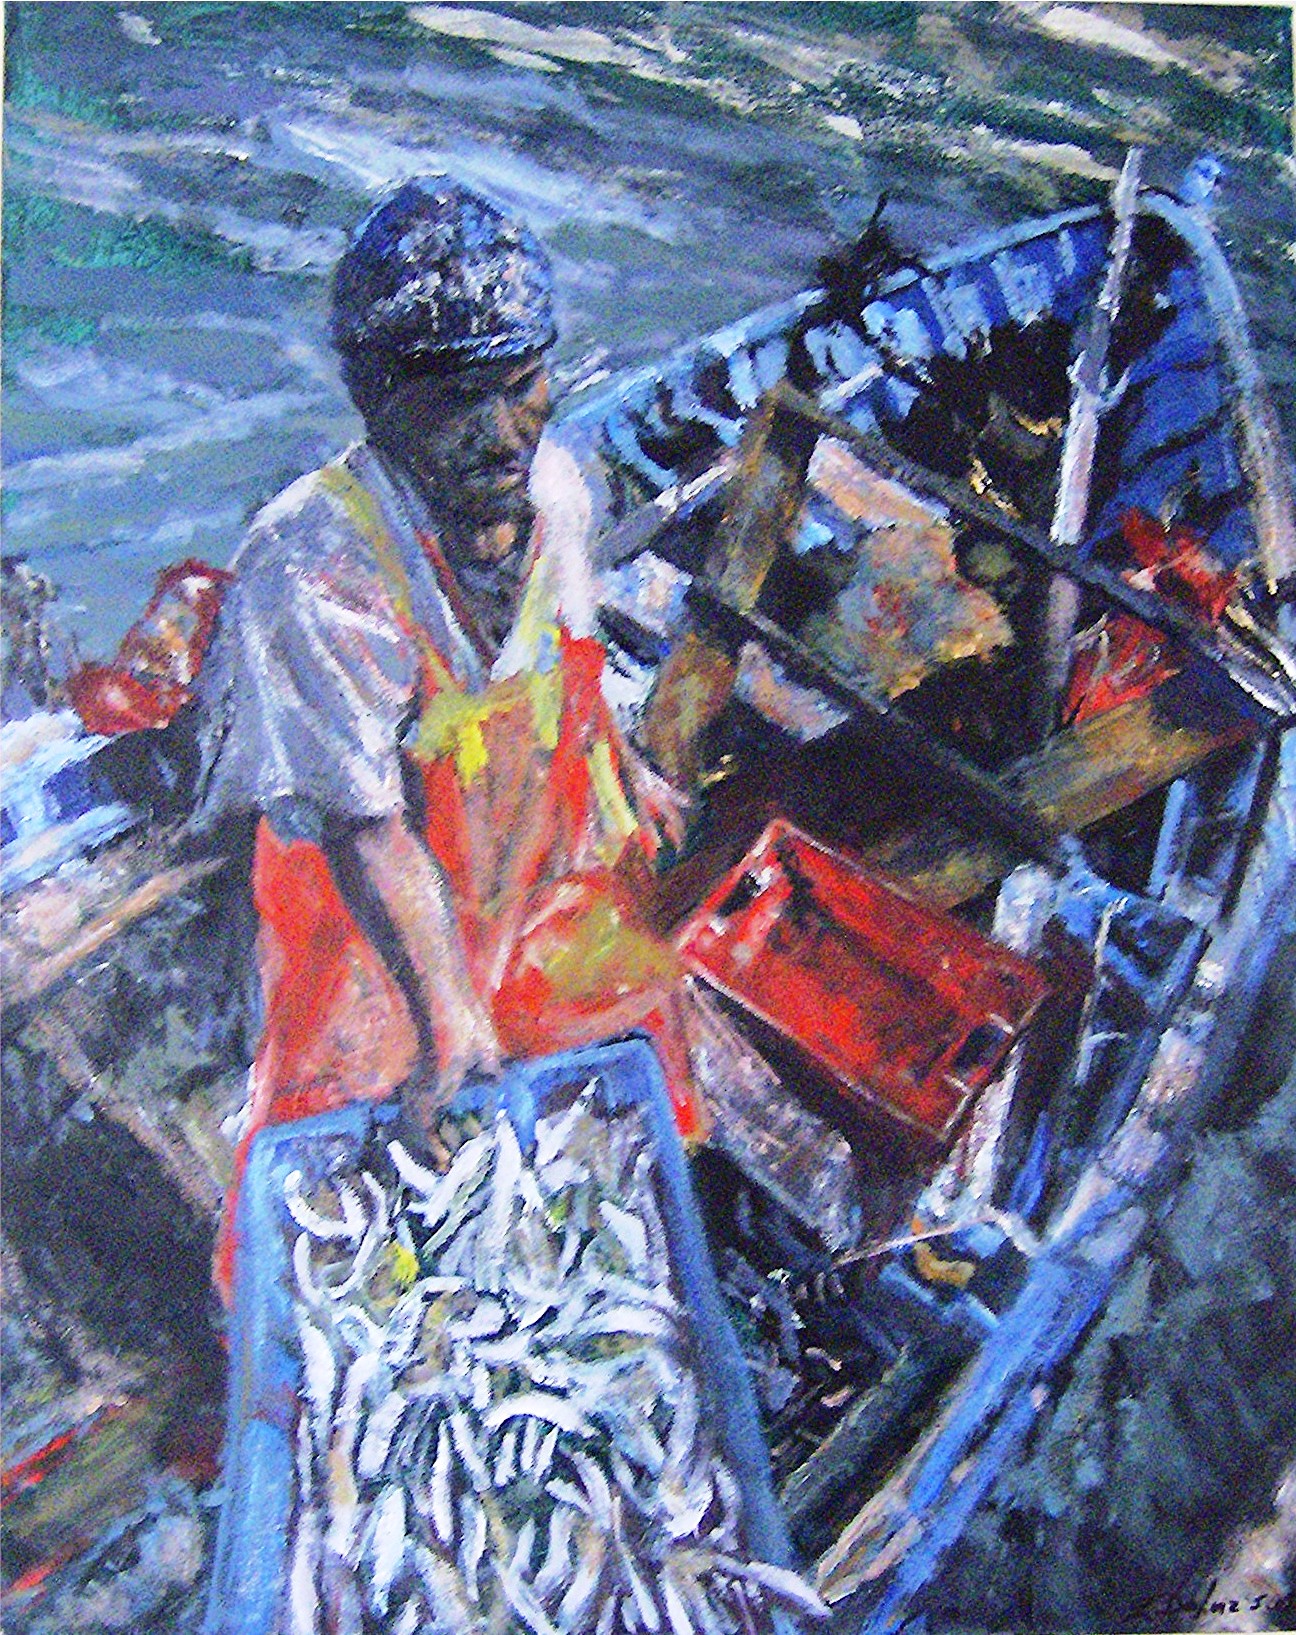 Pescador Peruano-Acrylic on canvas-30h x 24w in